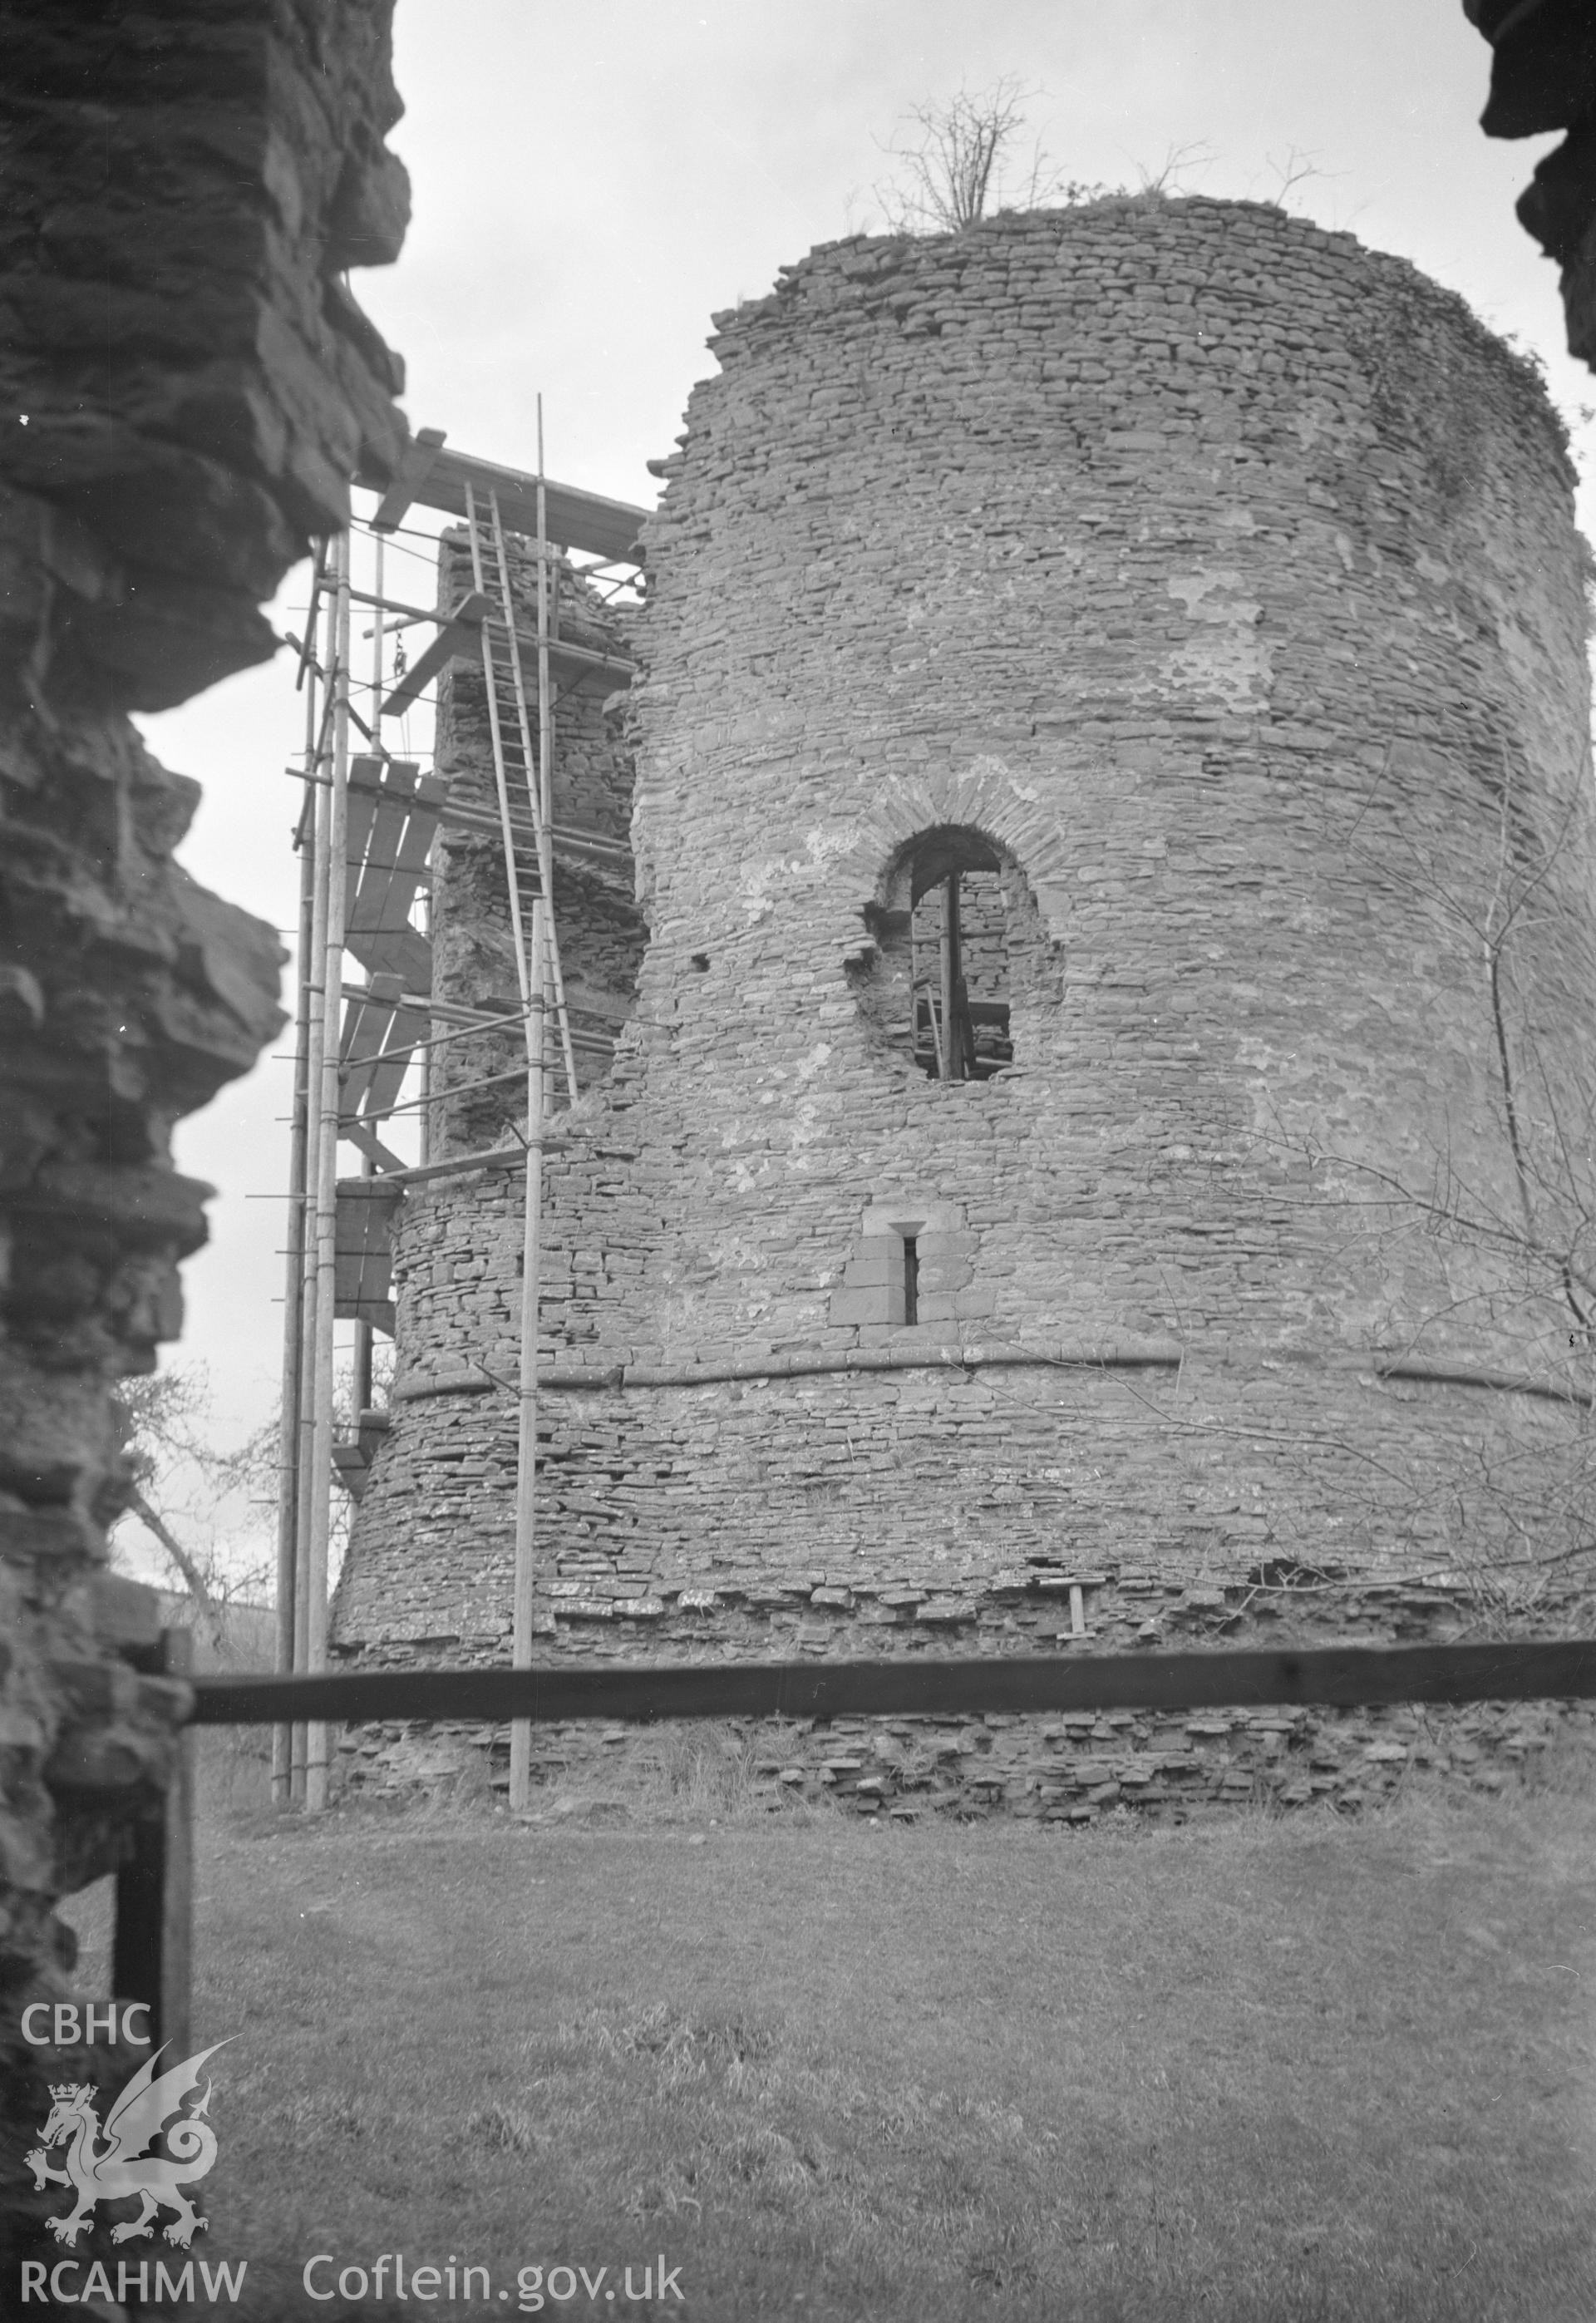 Digital copy of a nitrate negative showing view of Skenfrith Castle, taken by Leonard Monroe.